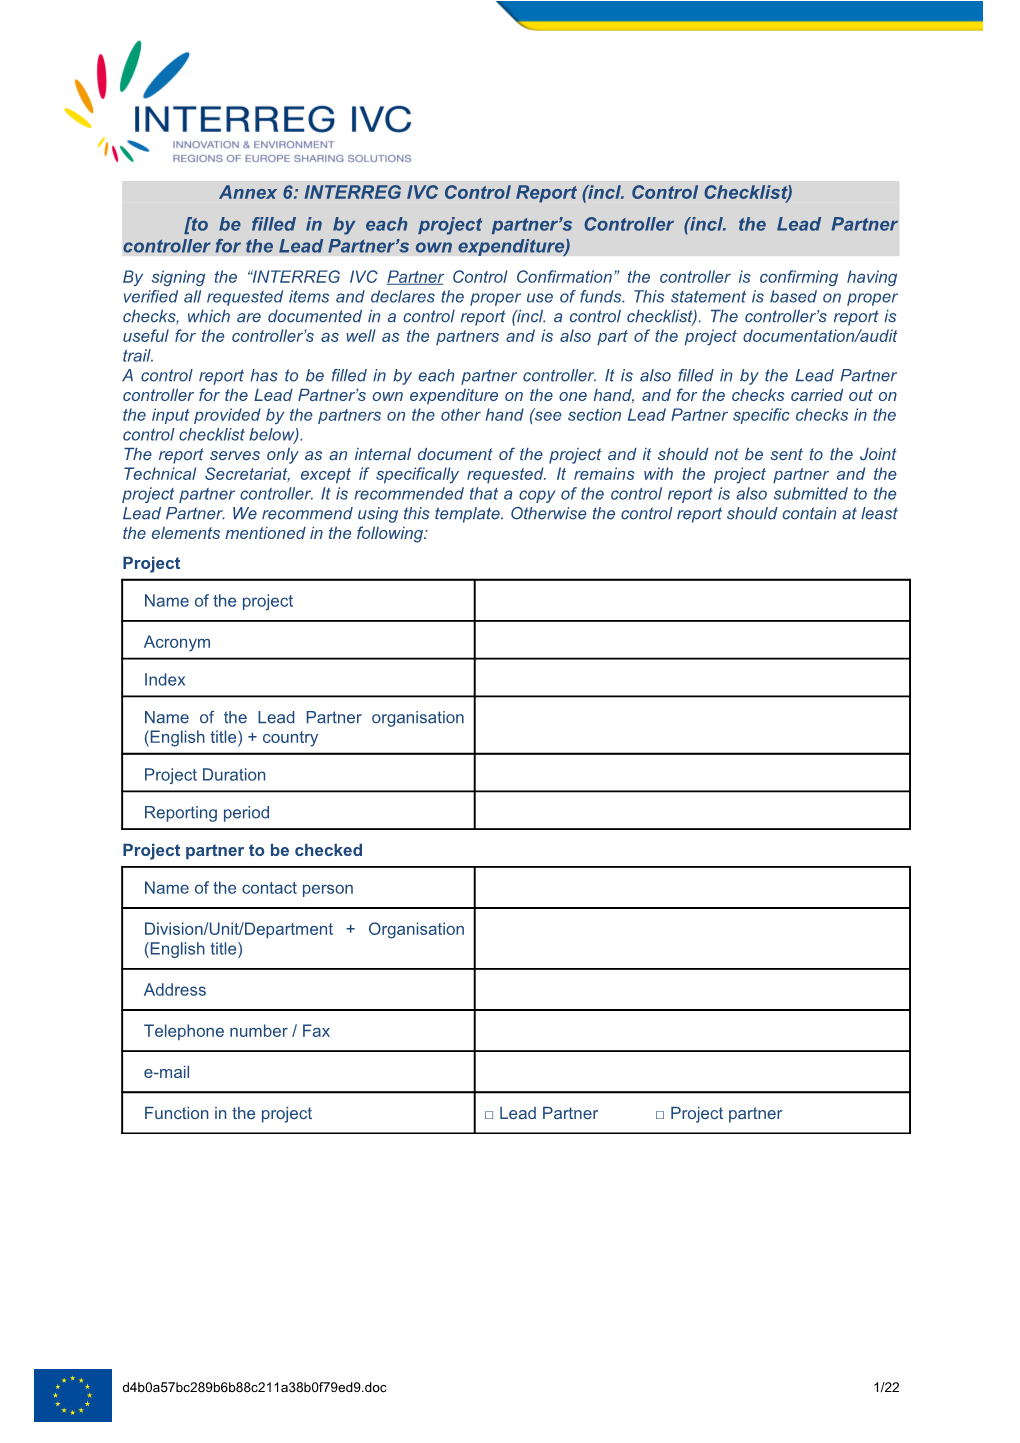 Annex 6: INTERREG IVC Control Report (Incl. Control Checklist)